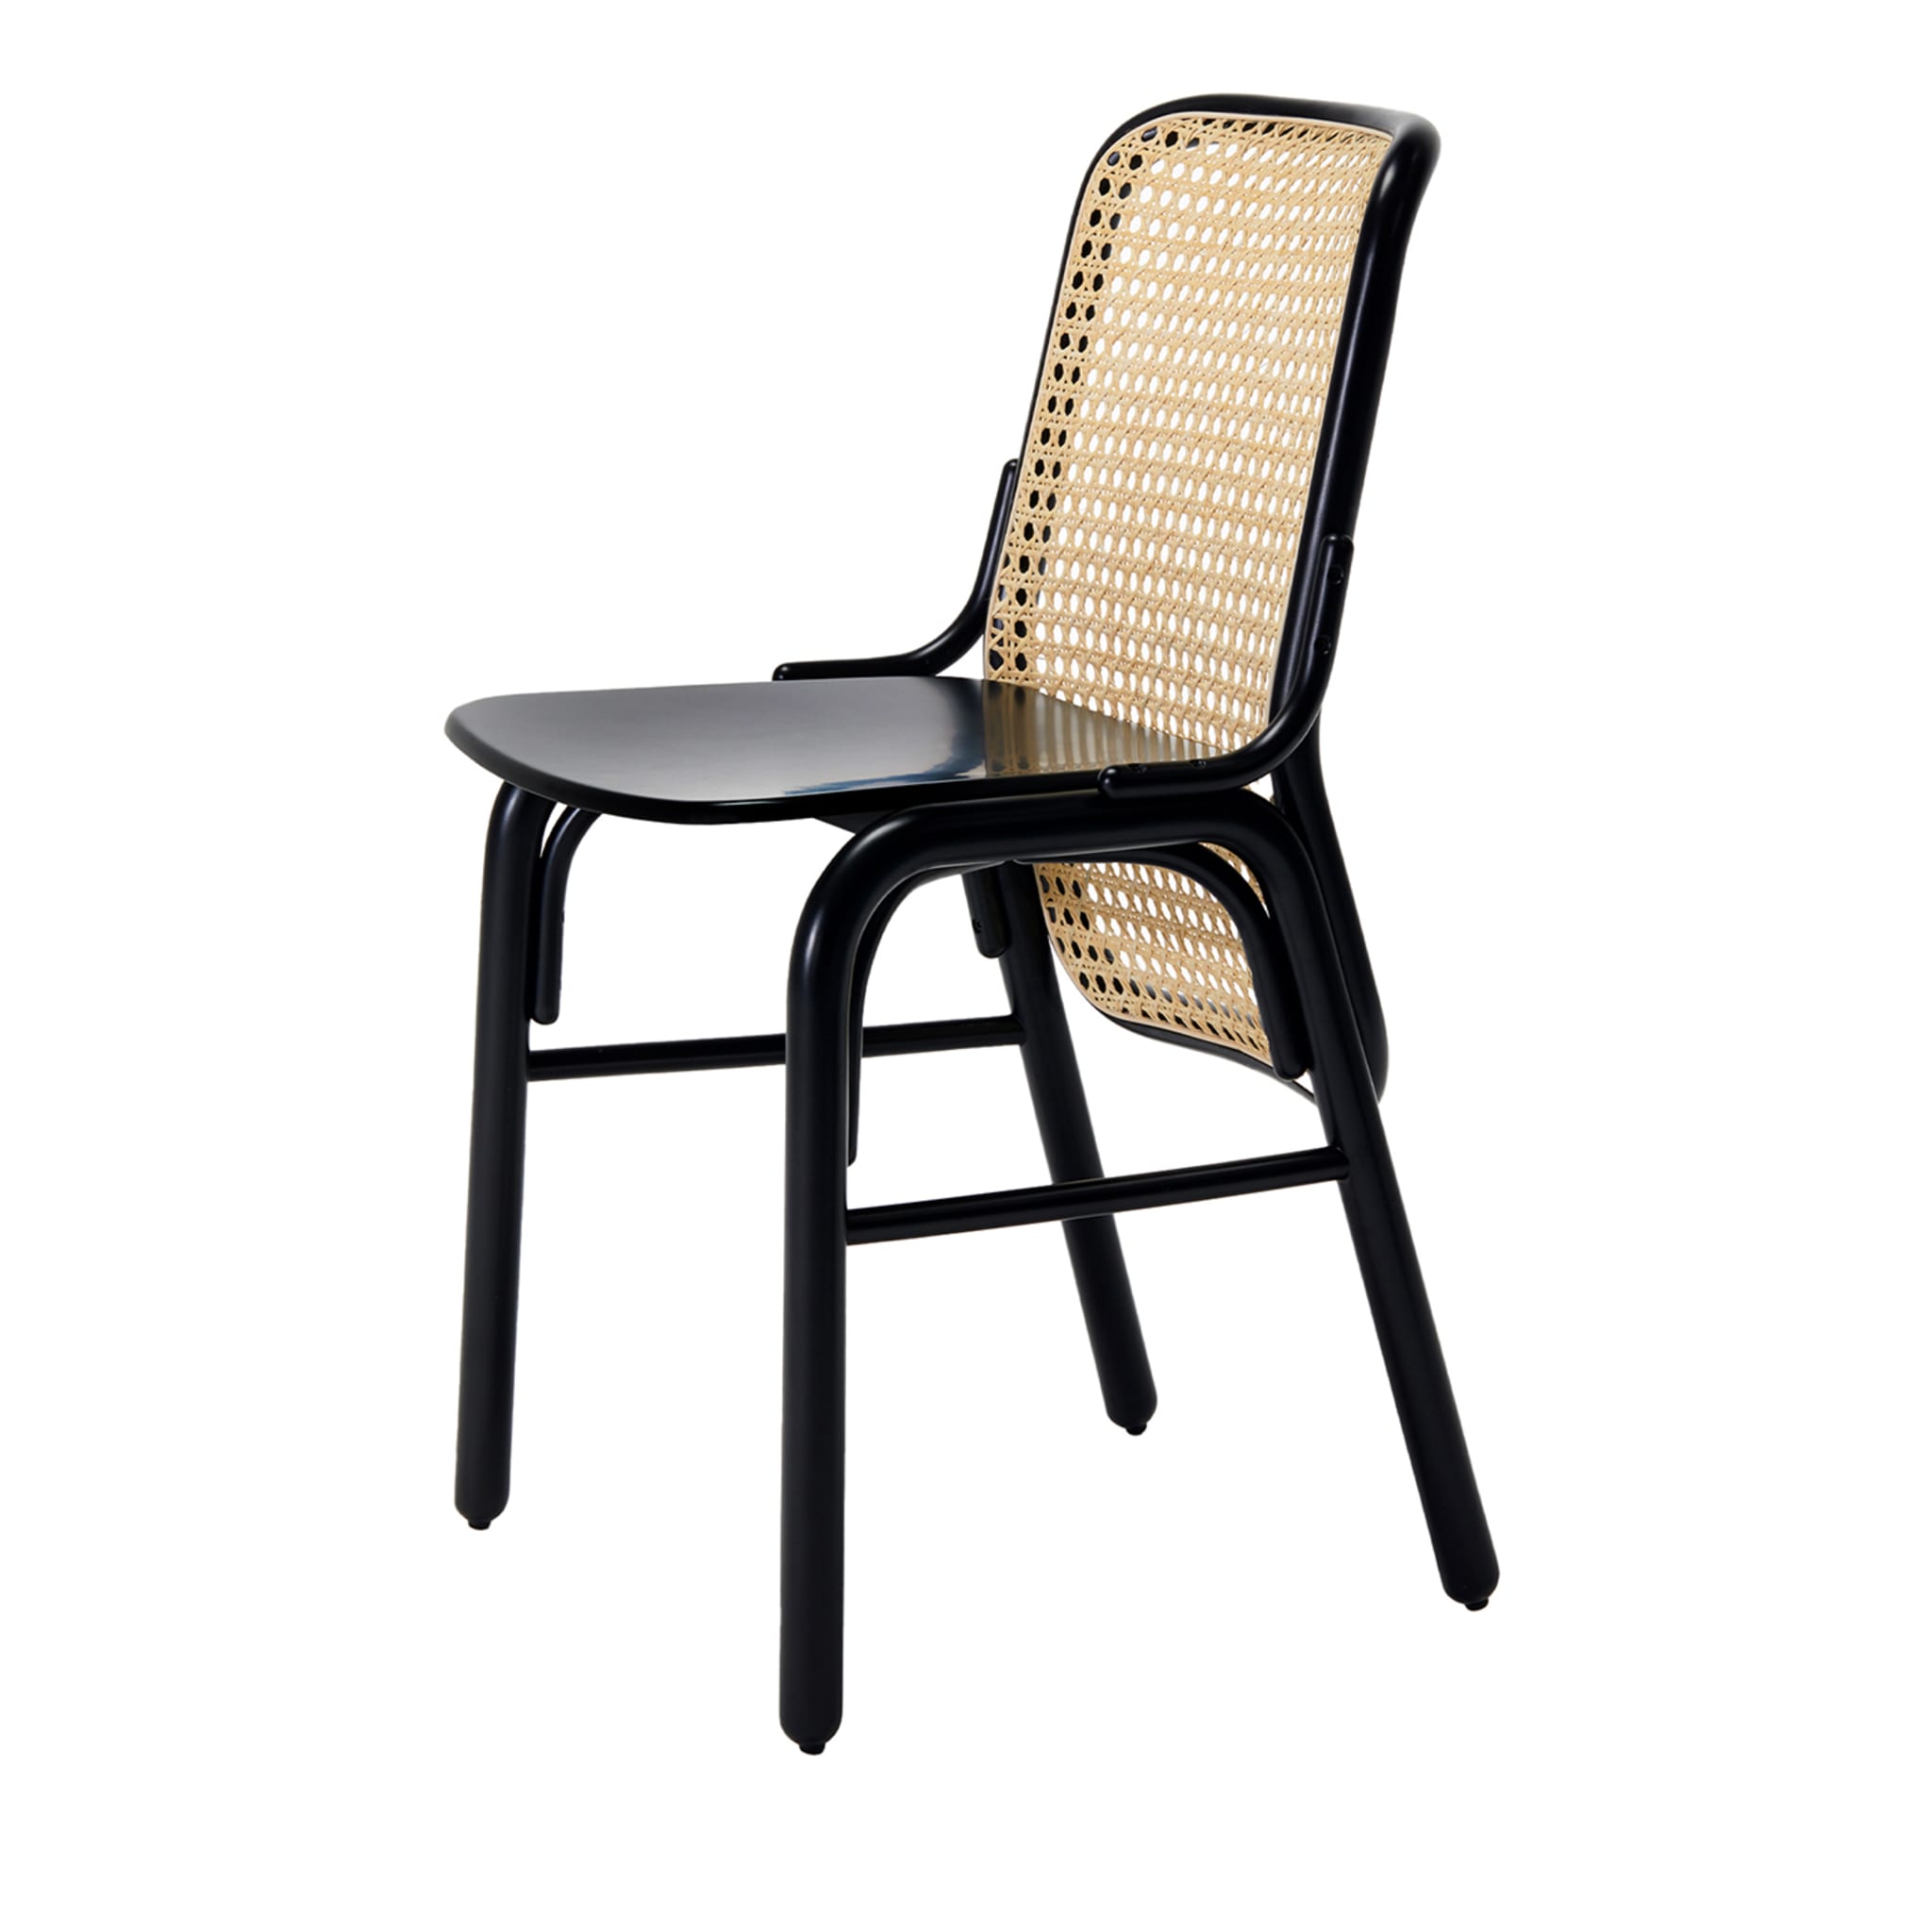 Frantz 885 Black Chair #1 di Gil Sheffi & Yoav Avinoam - Vista principale